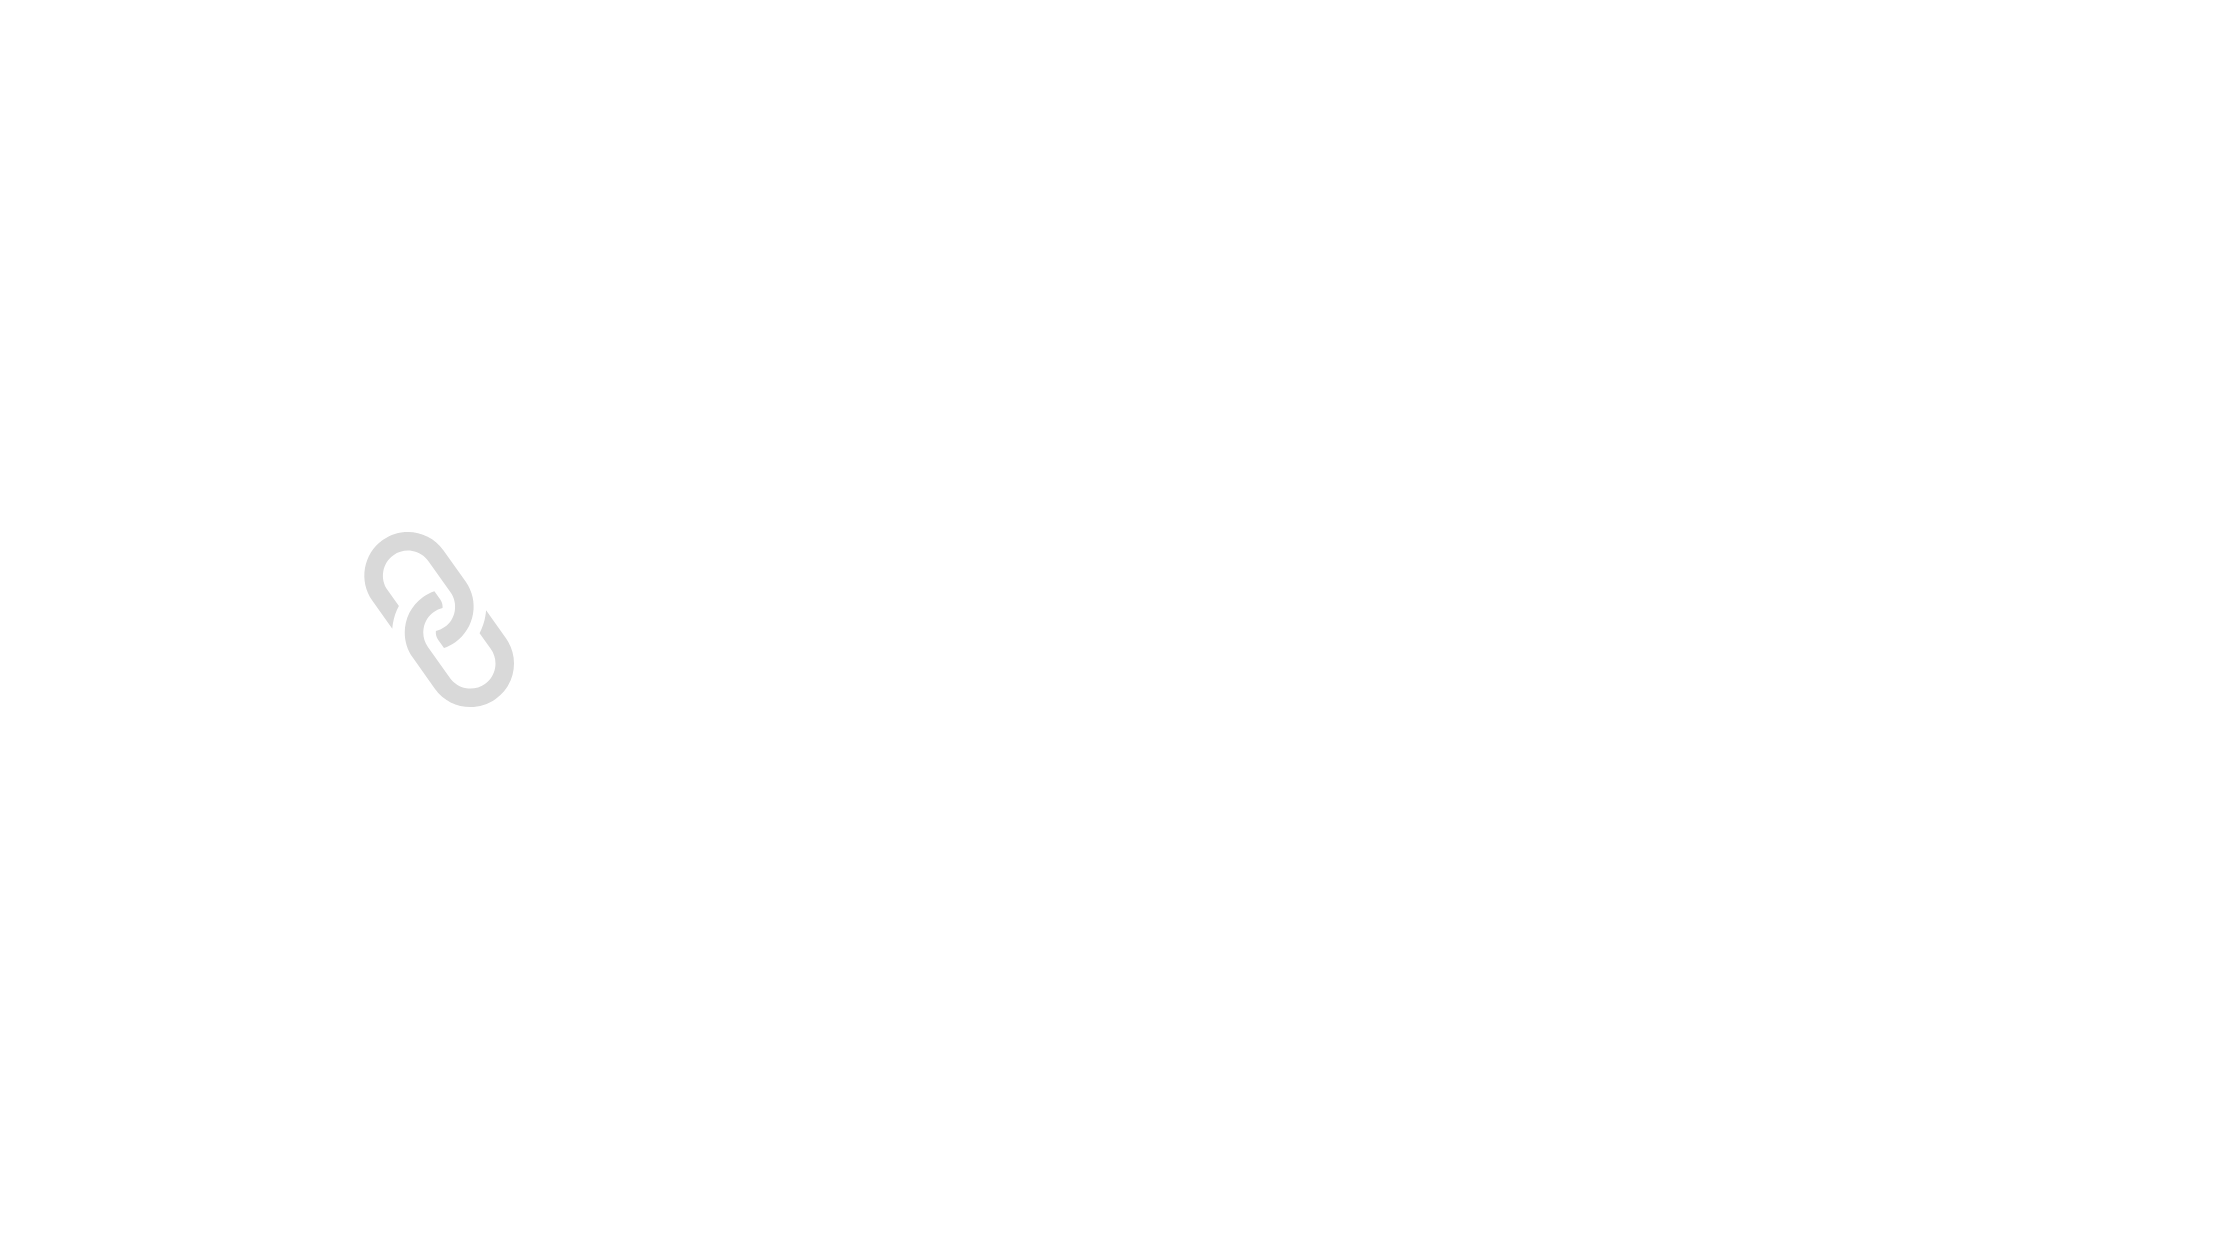 EMOTIONAL LINK LLC